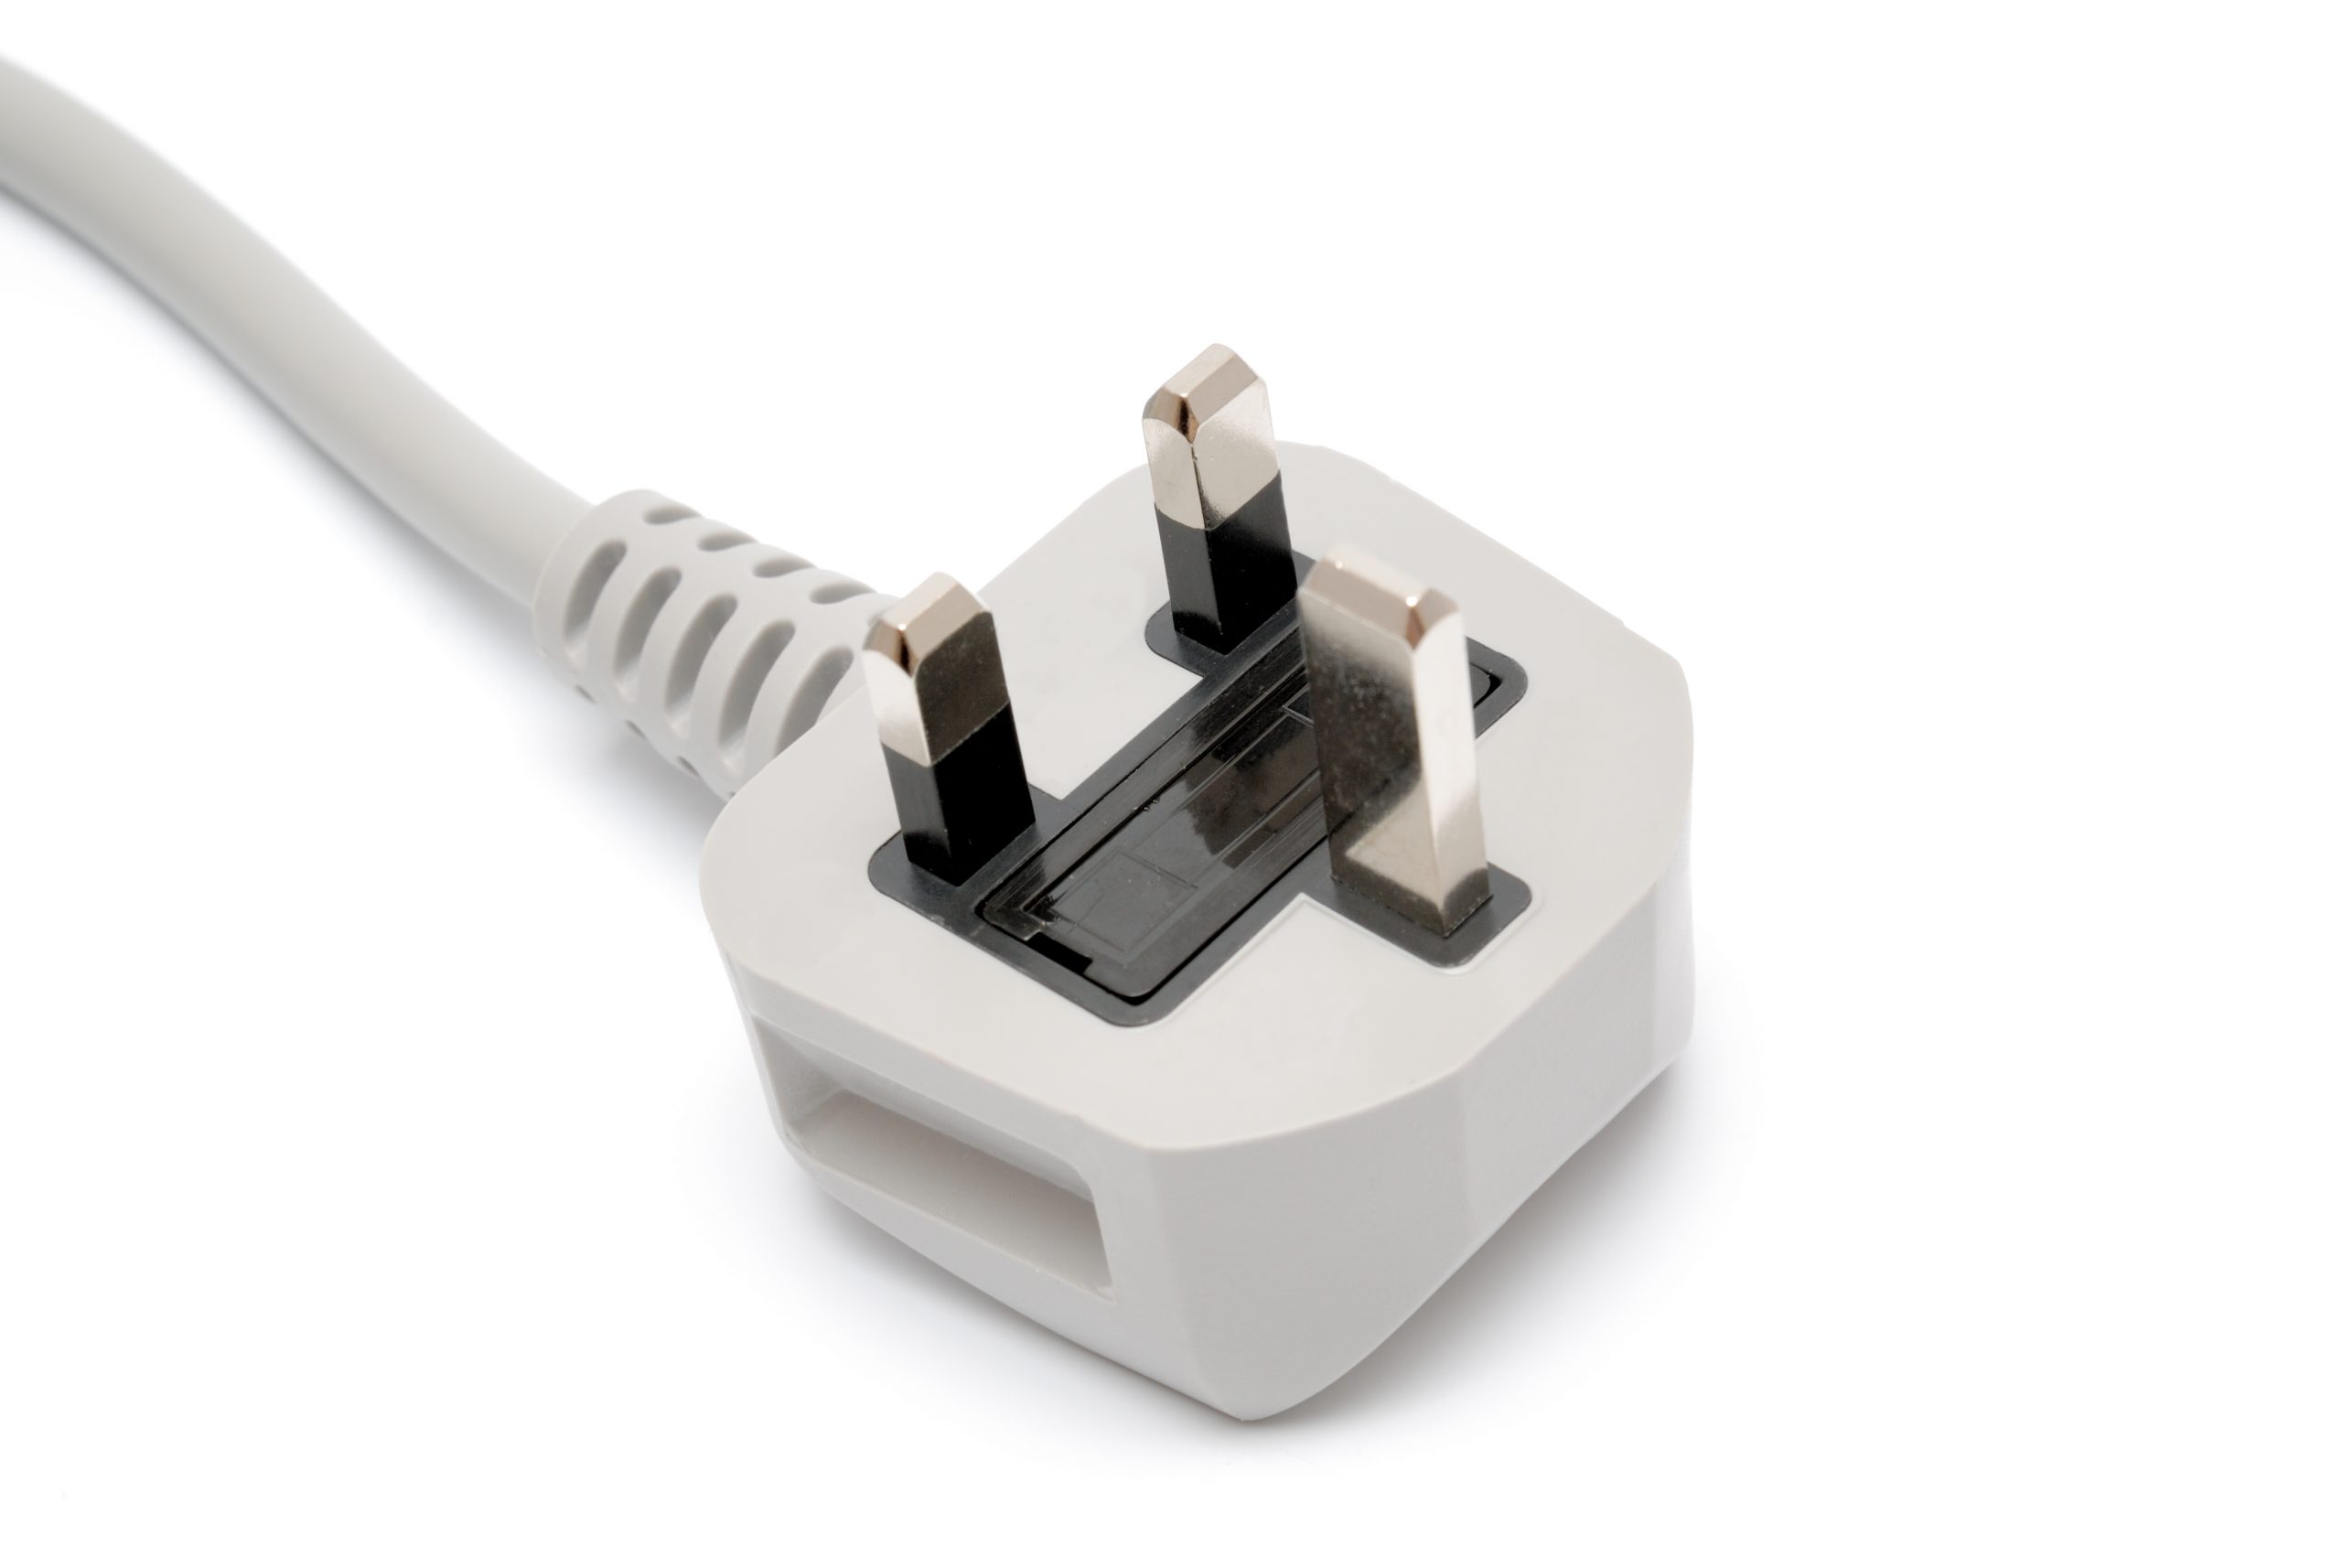 Power Plug - close up on power cord